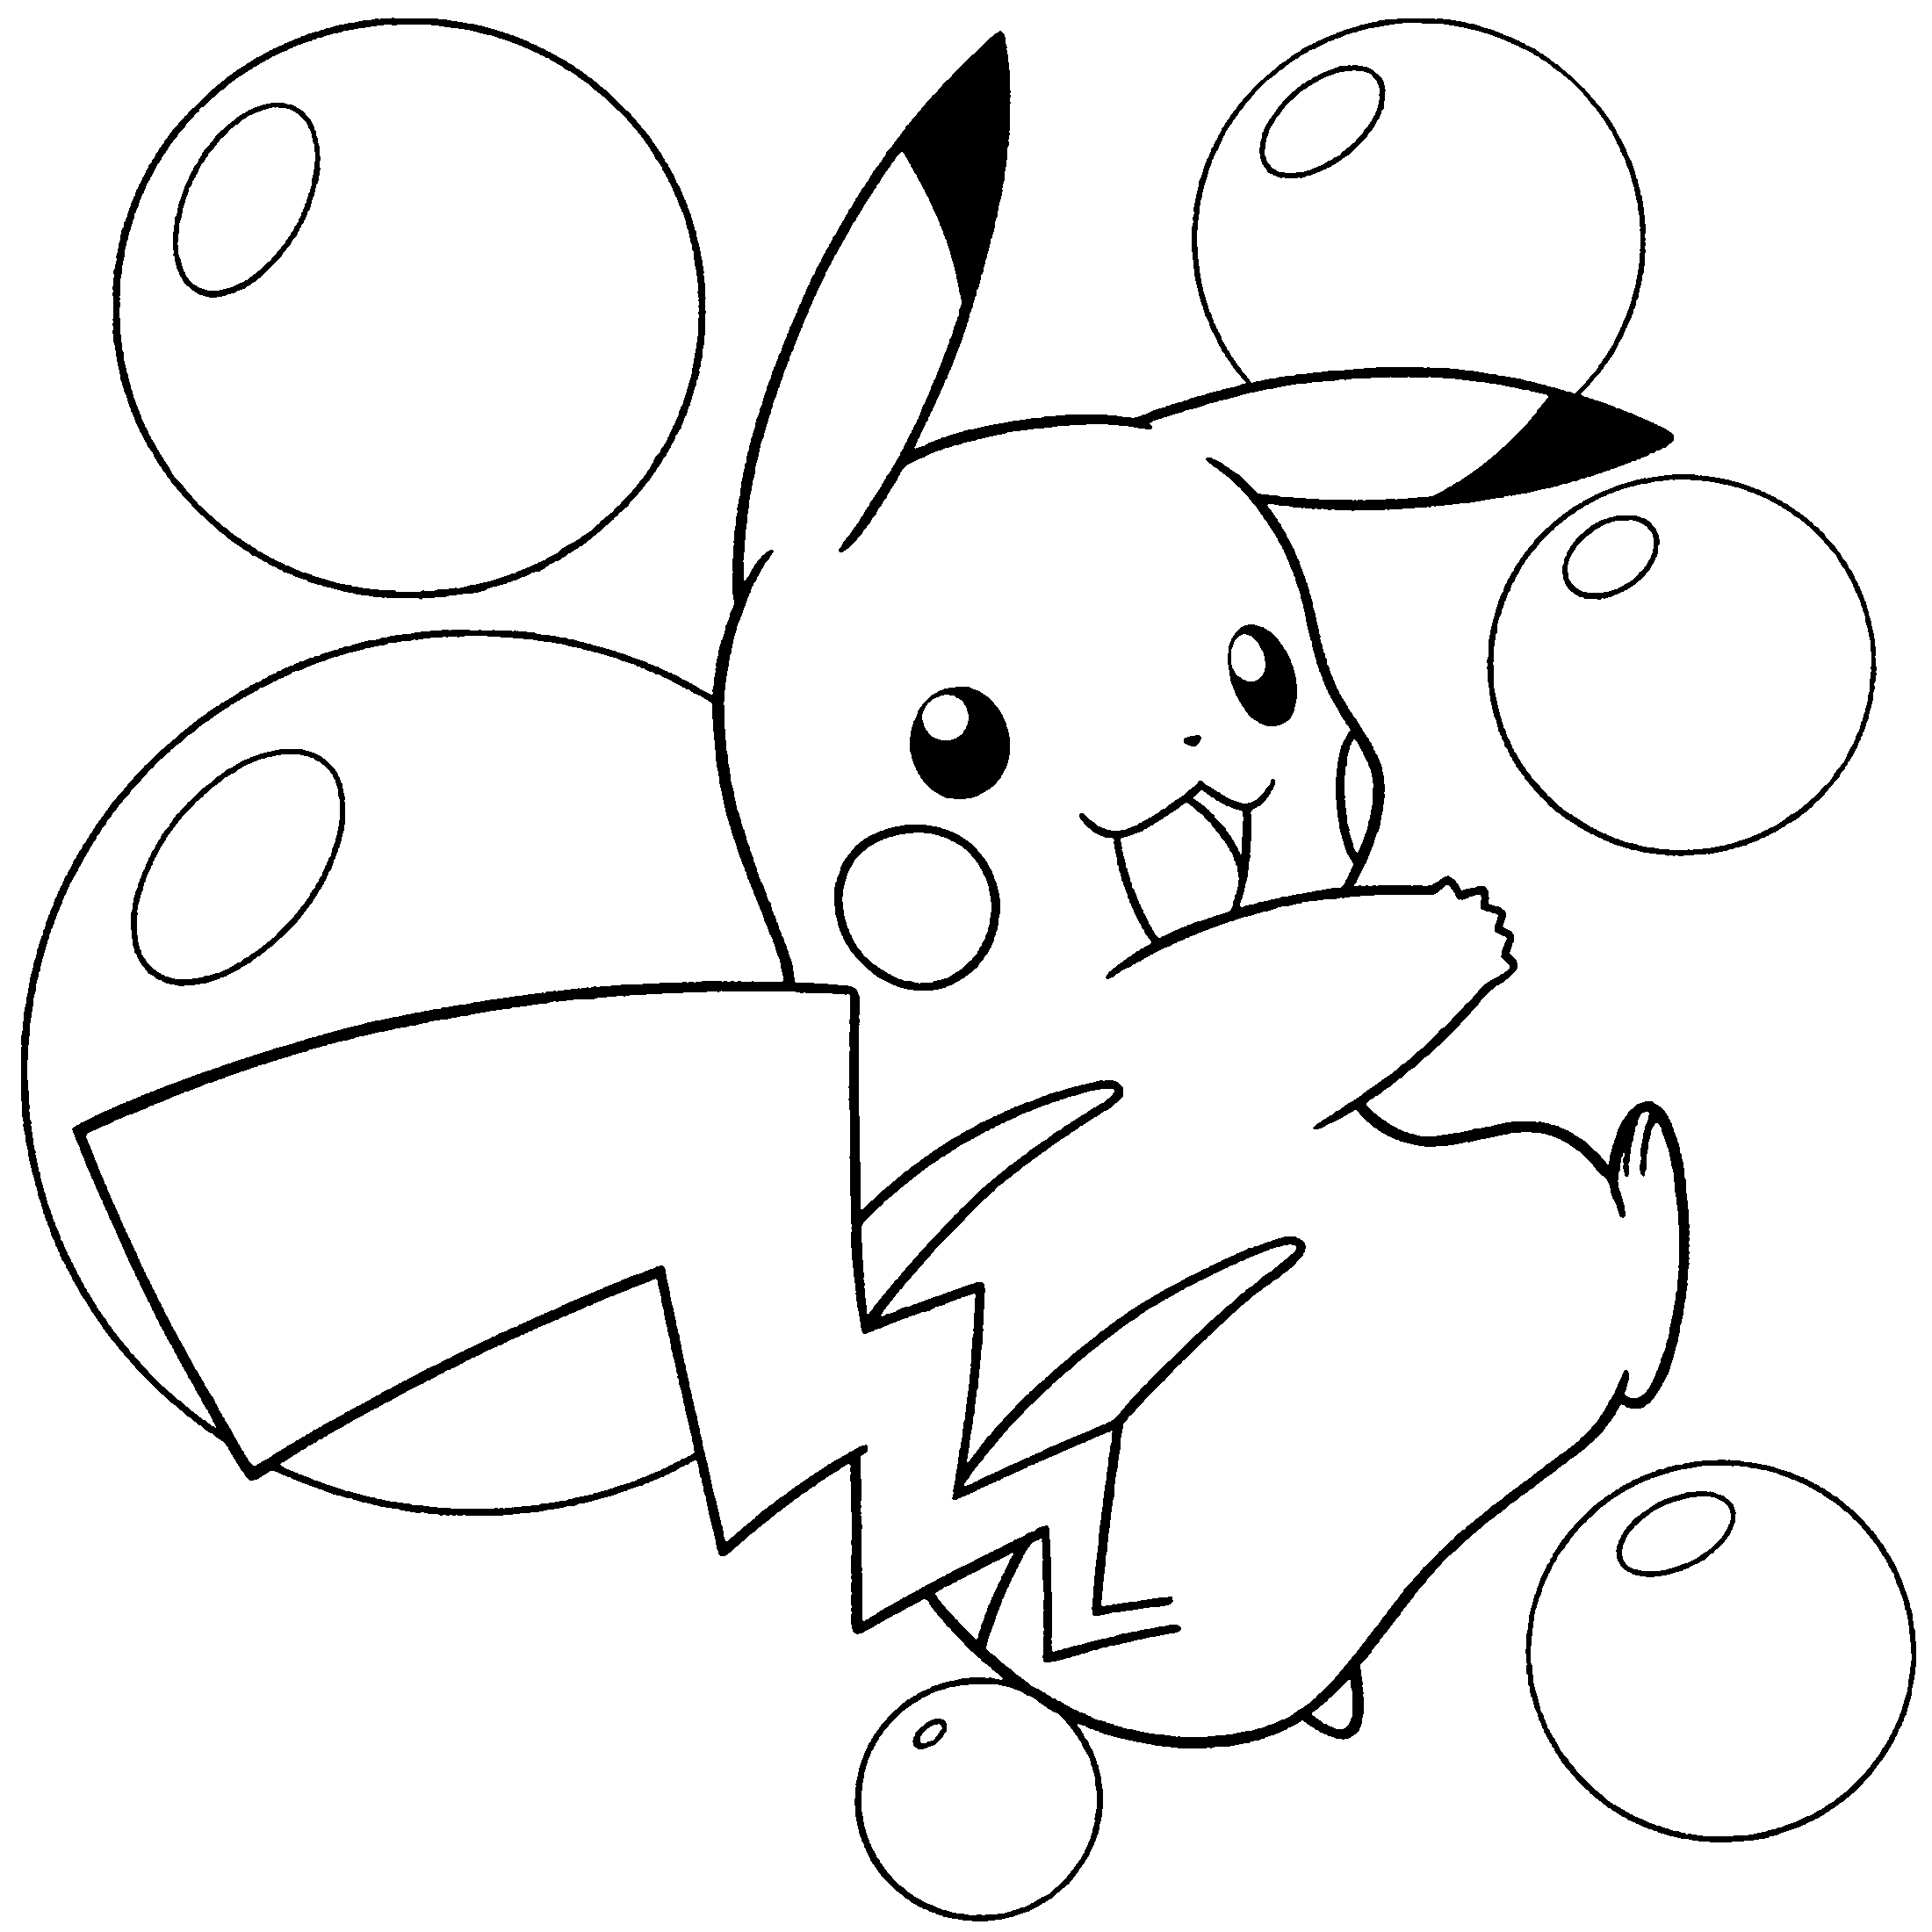 Pokemon diamond pearl coloring pages dibujo de pikachu dibujos para colorear pokemon colorear pokemon